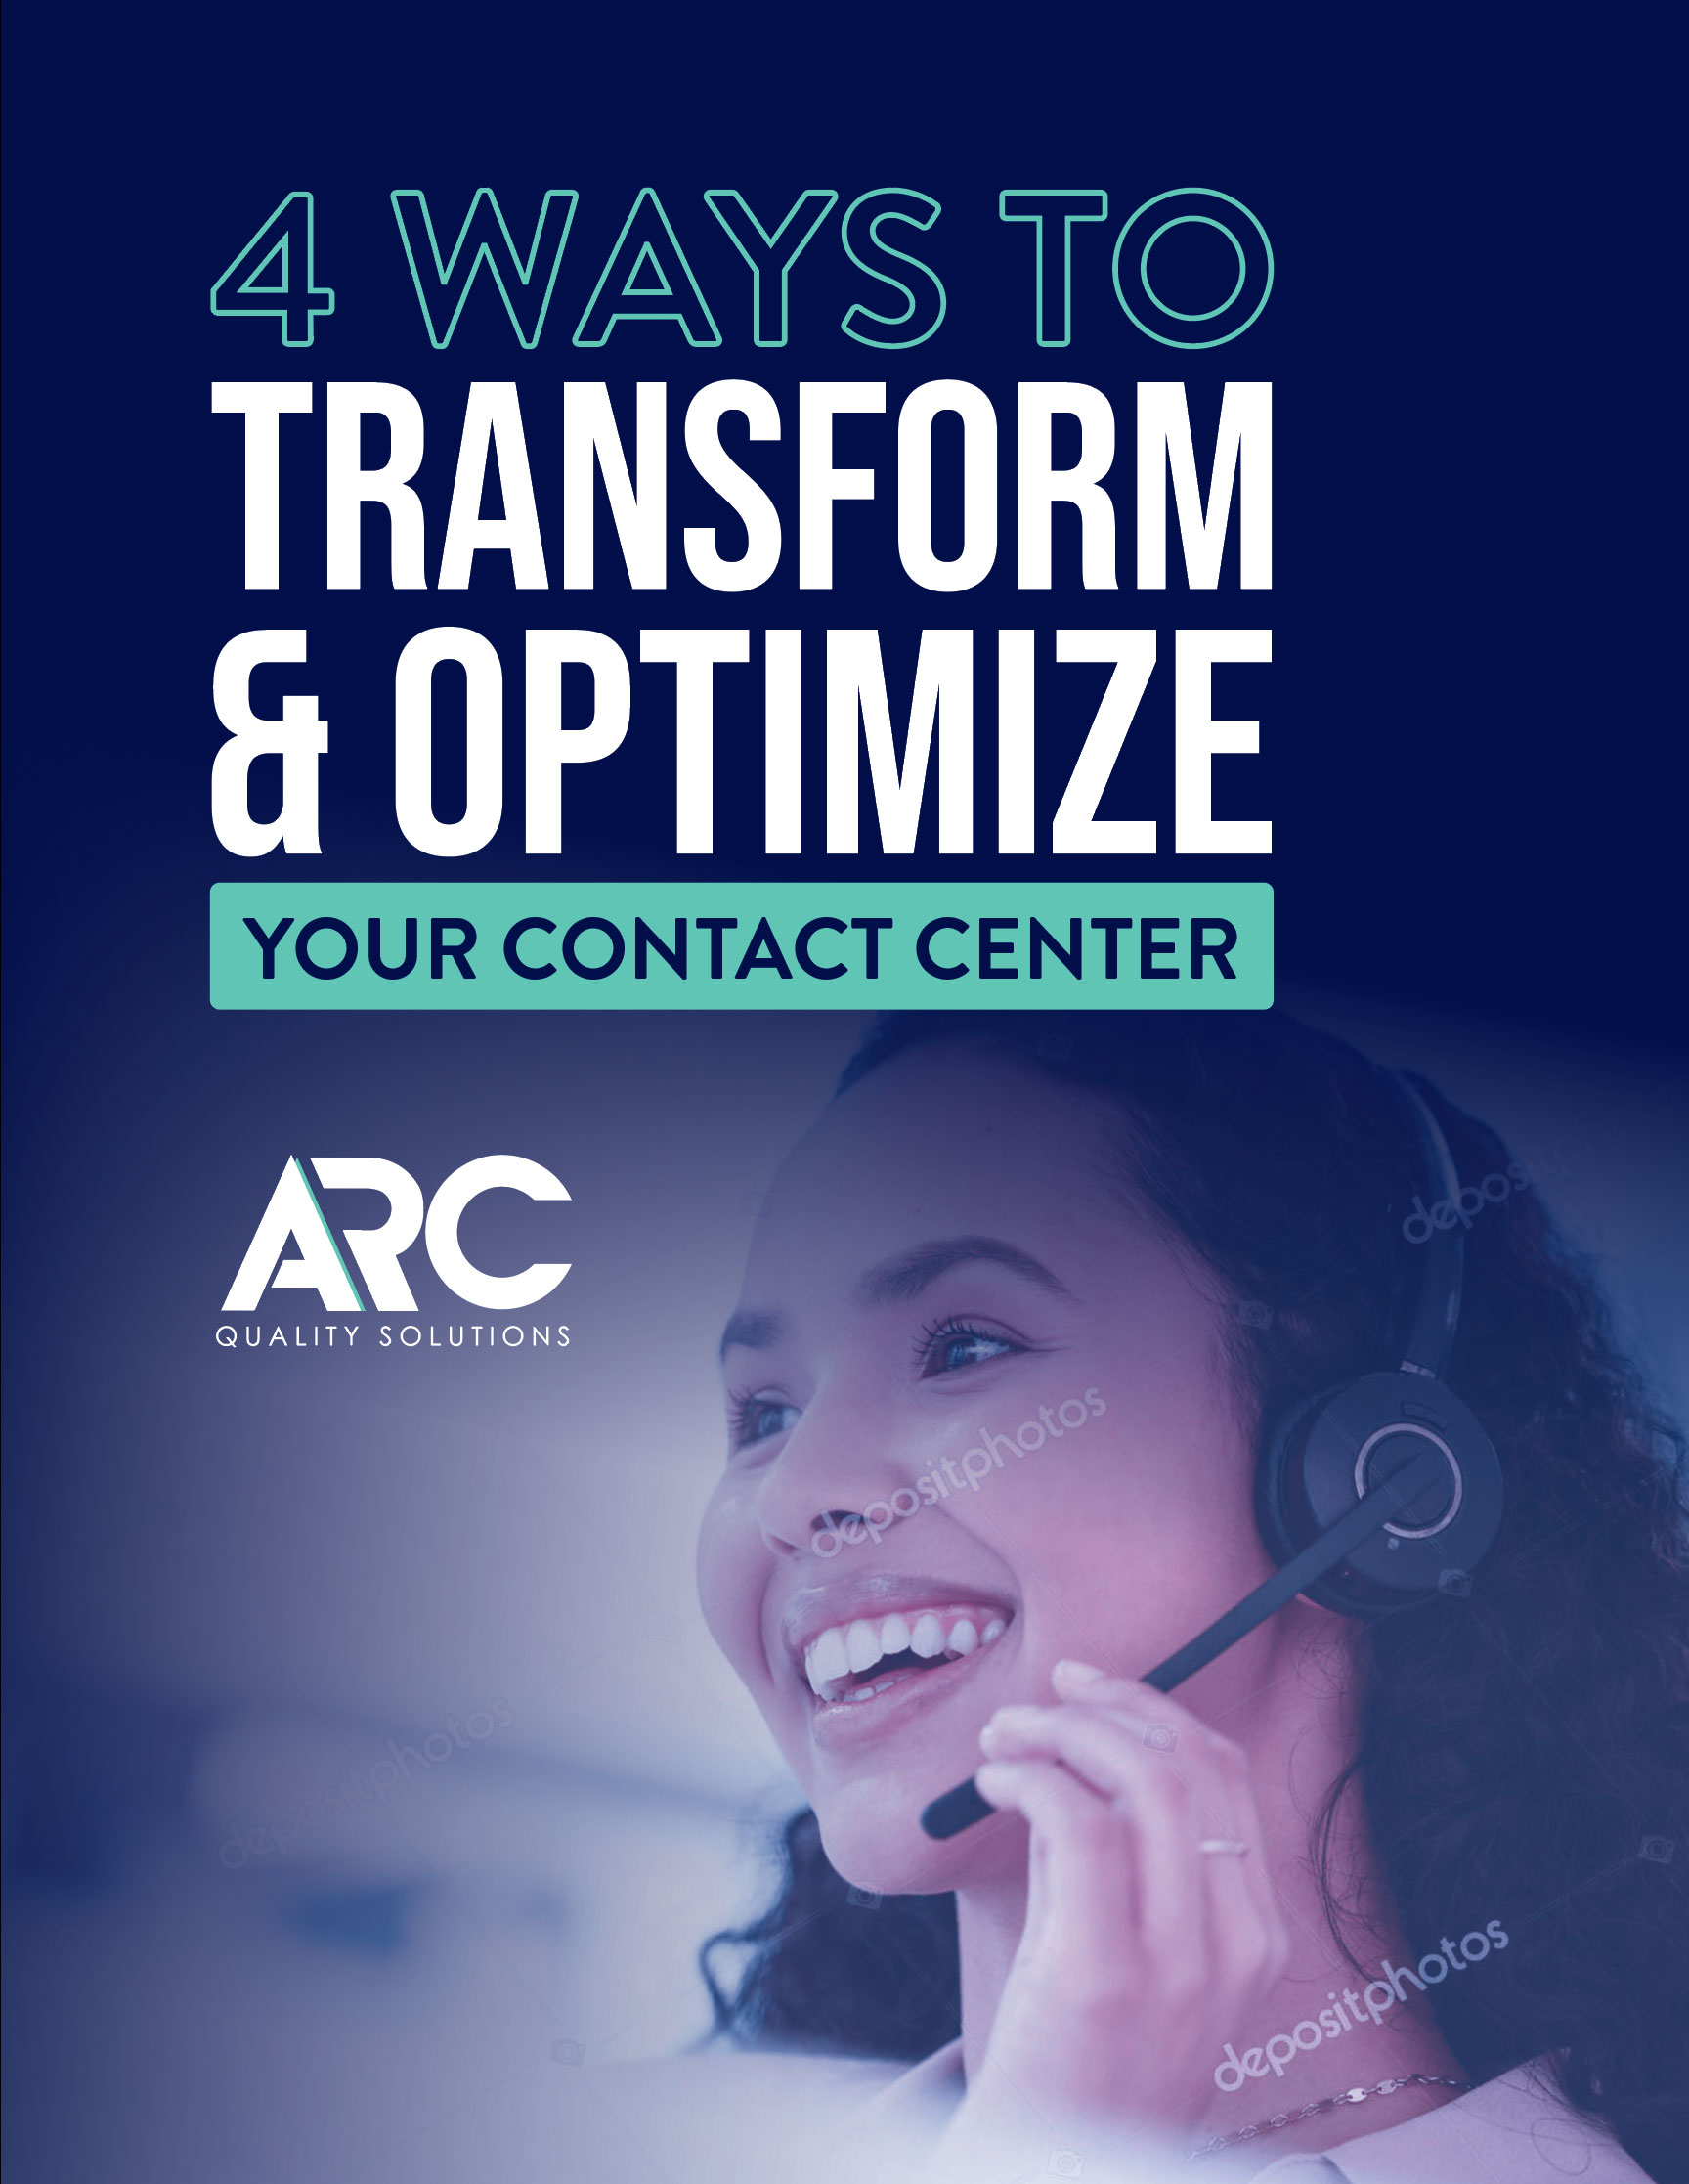 Optimize your Contact Center